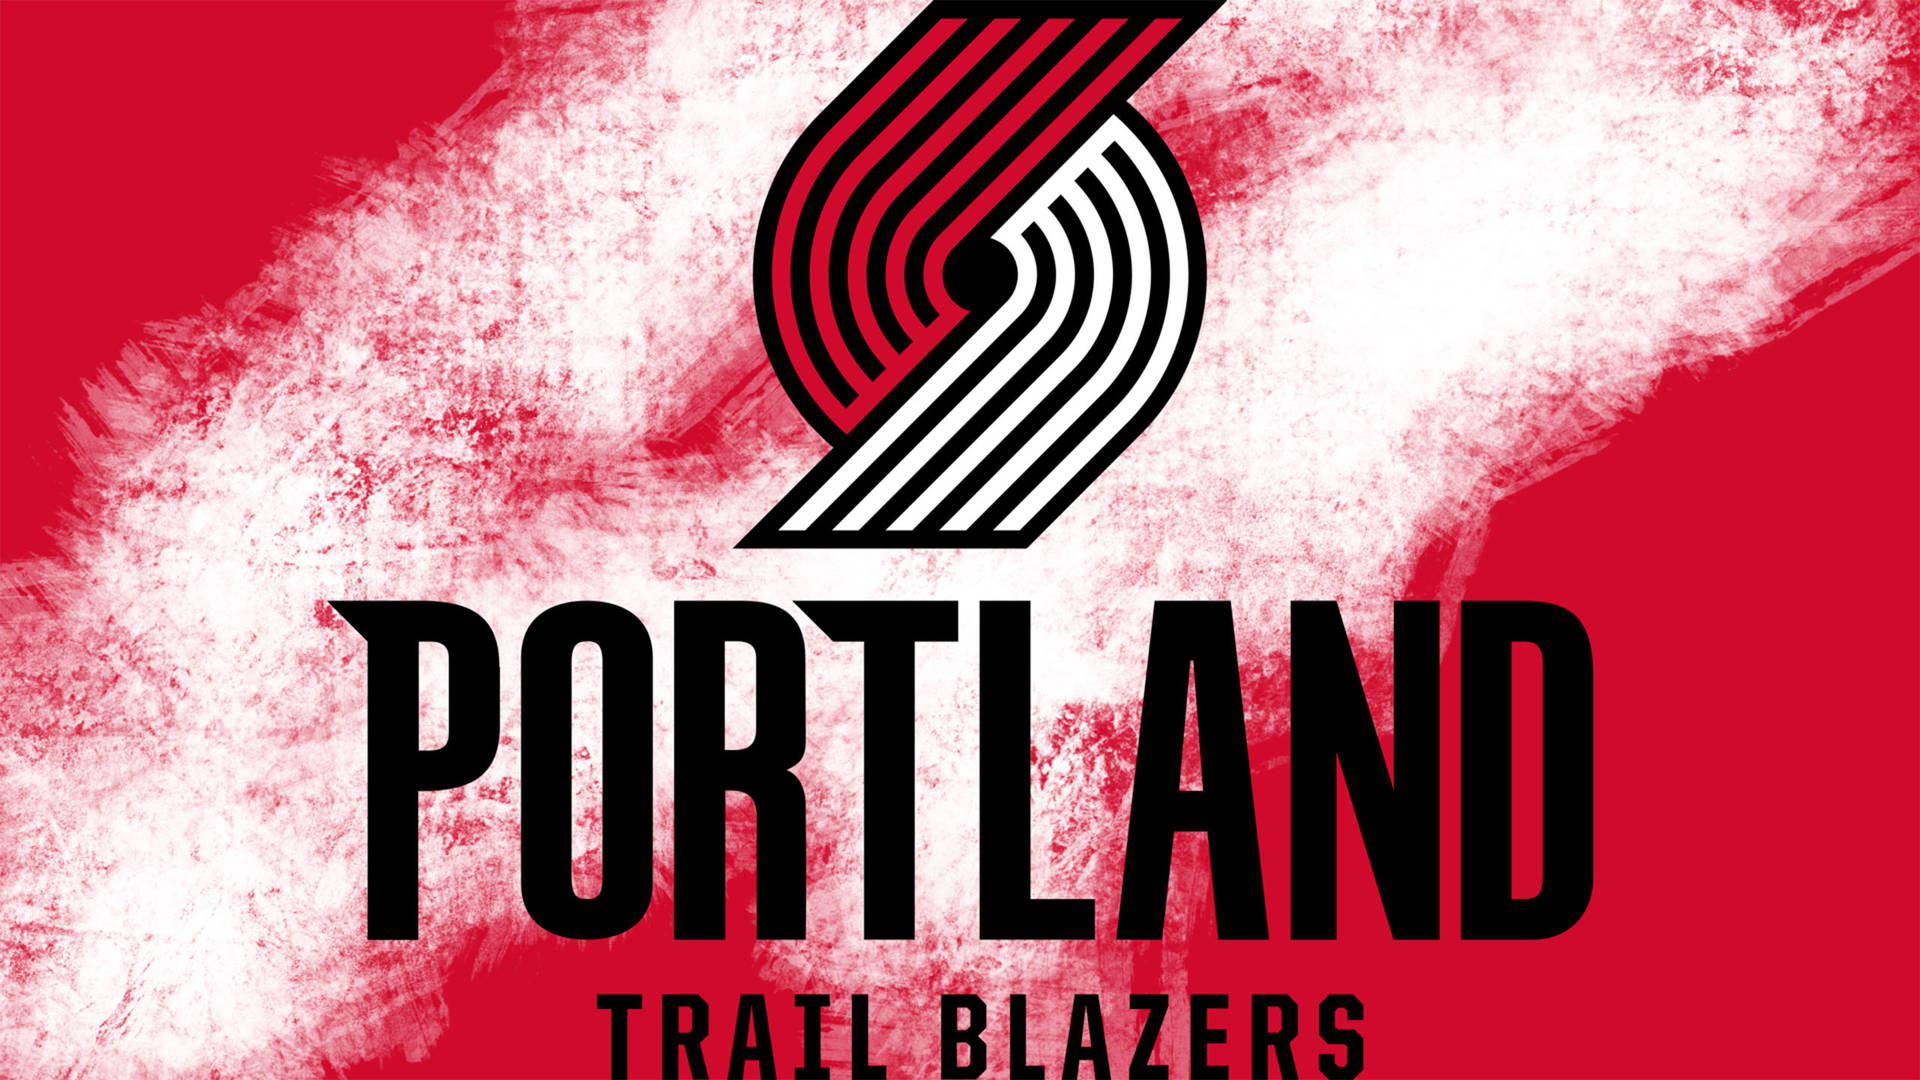 Portland Trail Blazers Reddish White Background Wallpaper